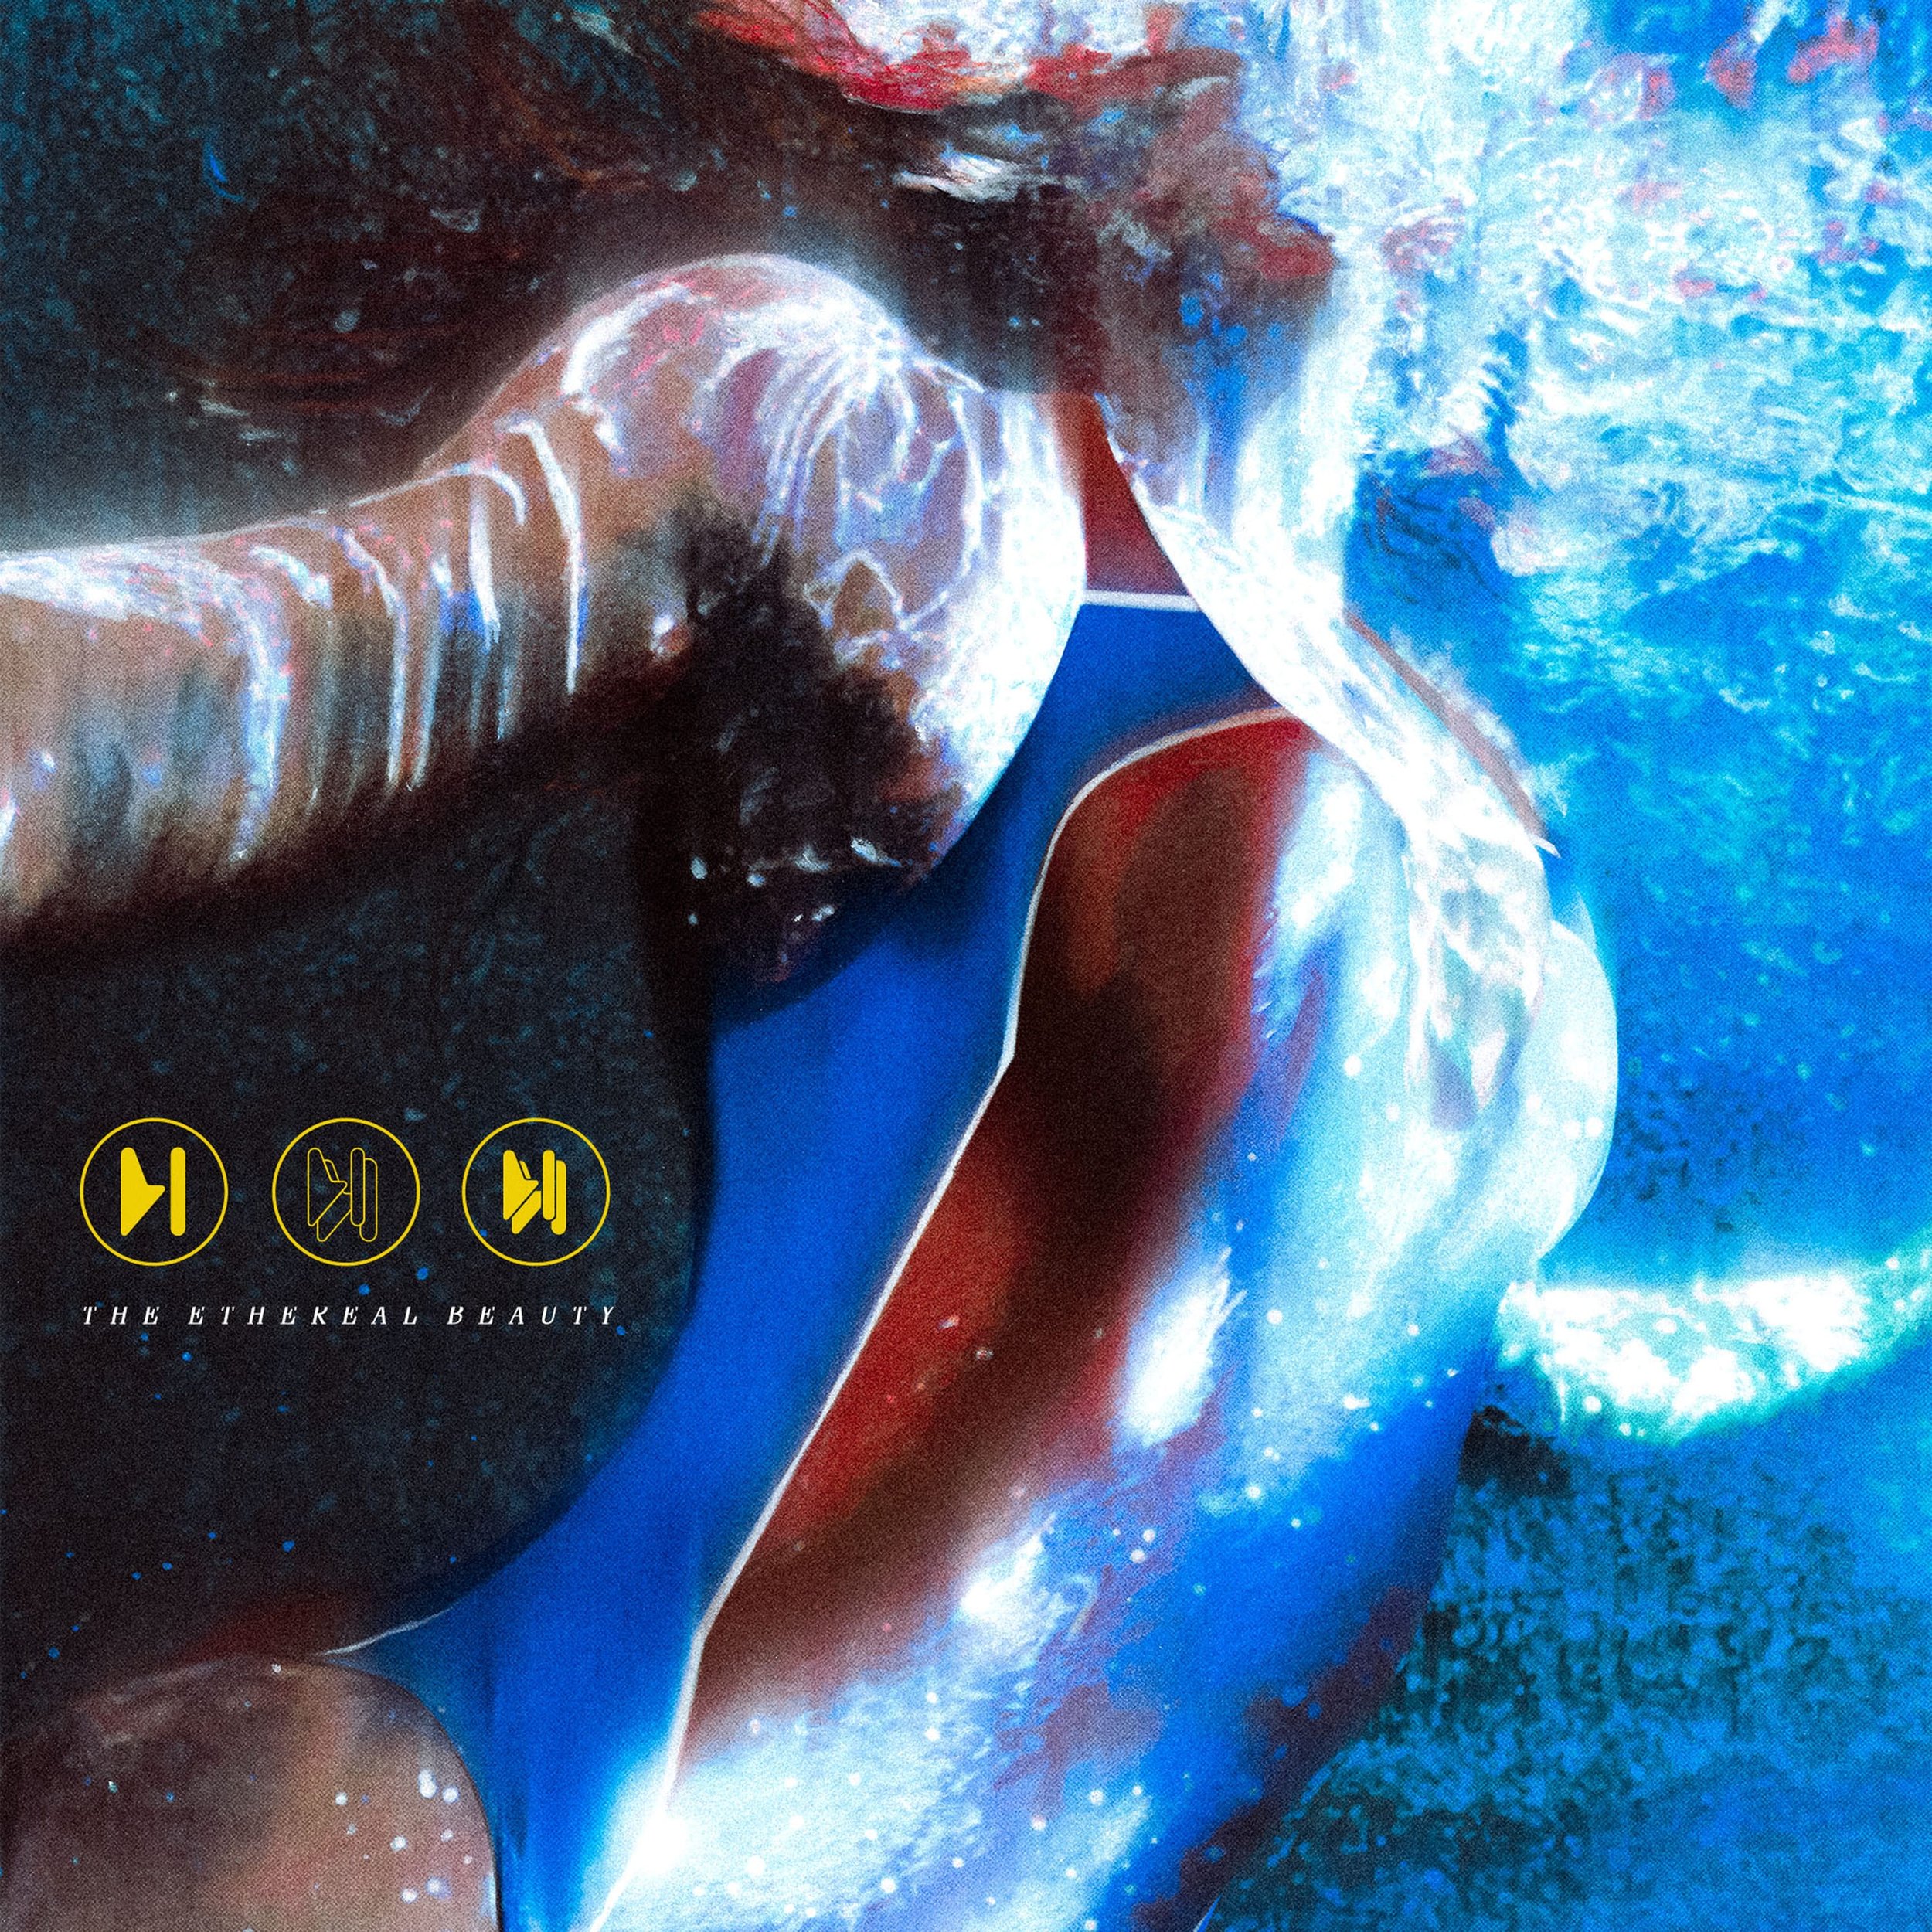 Holydanger - The Ethereal Beauty - Cover.jpg